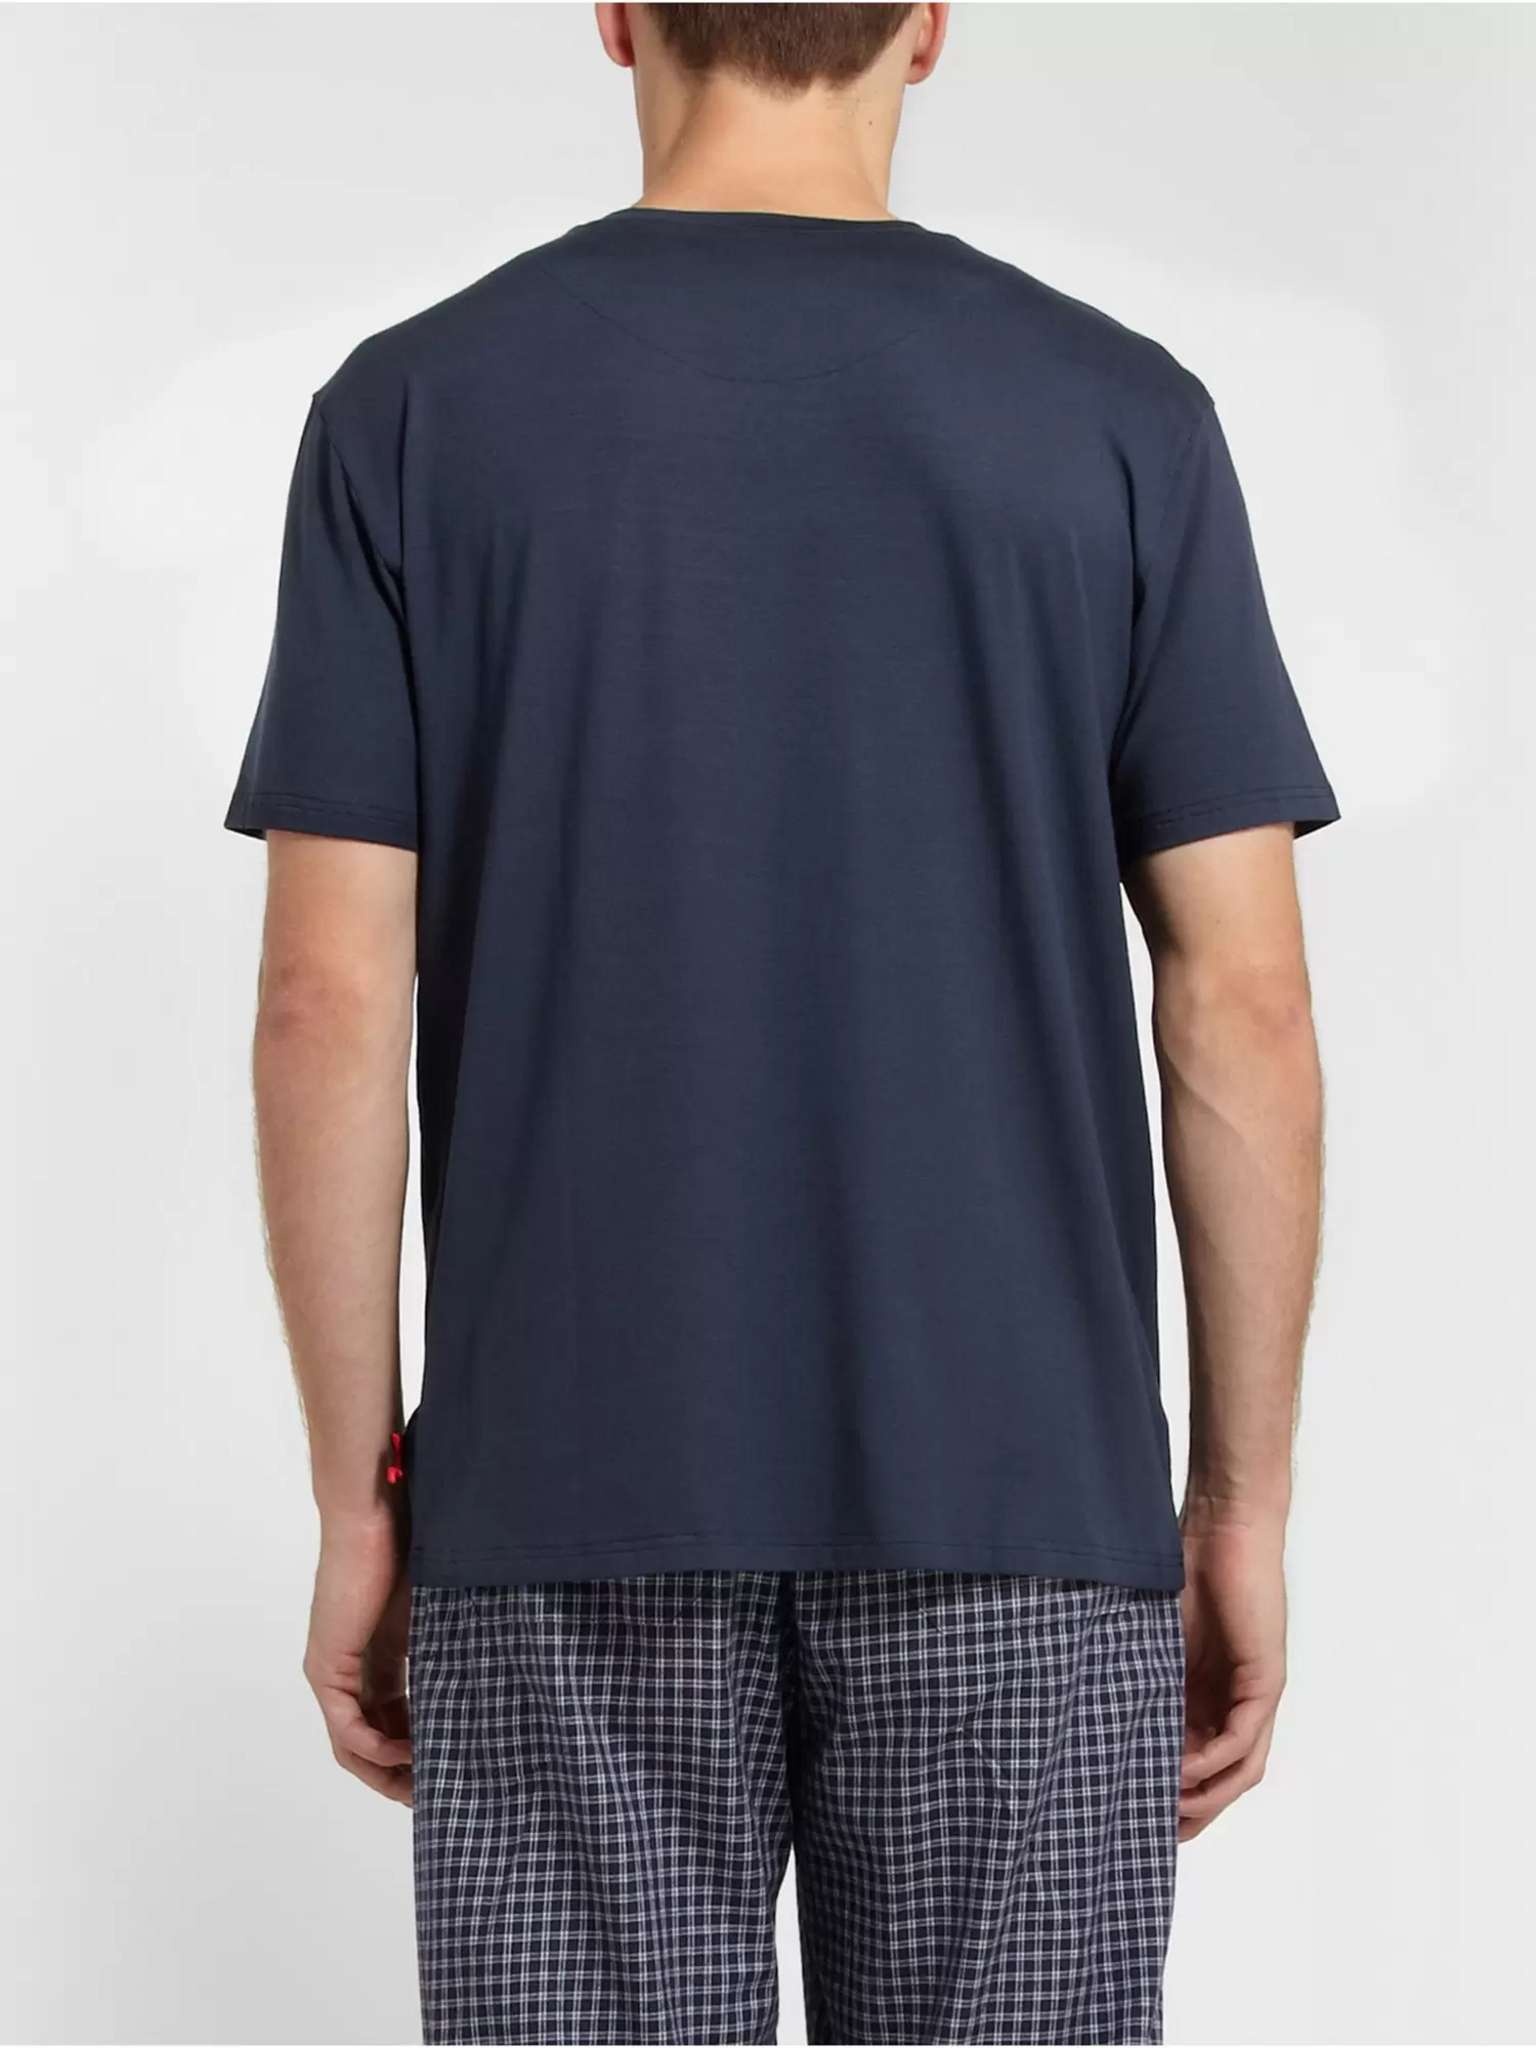 Basel Stretch Micro Modal Jersey T-Shirt - 4